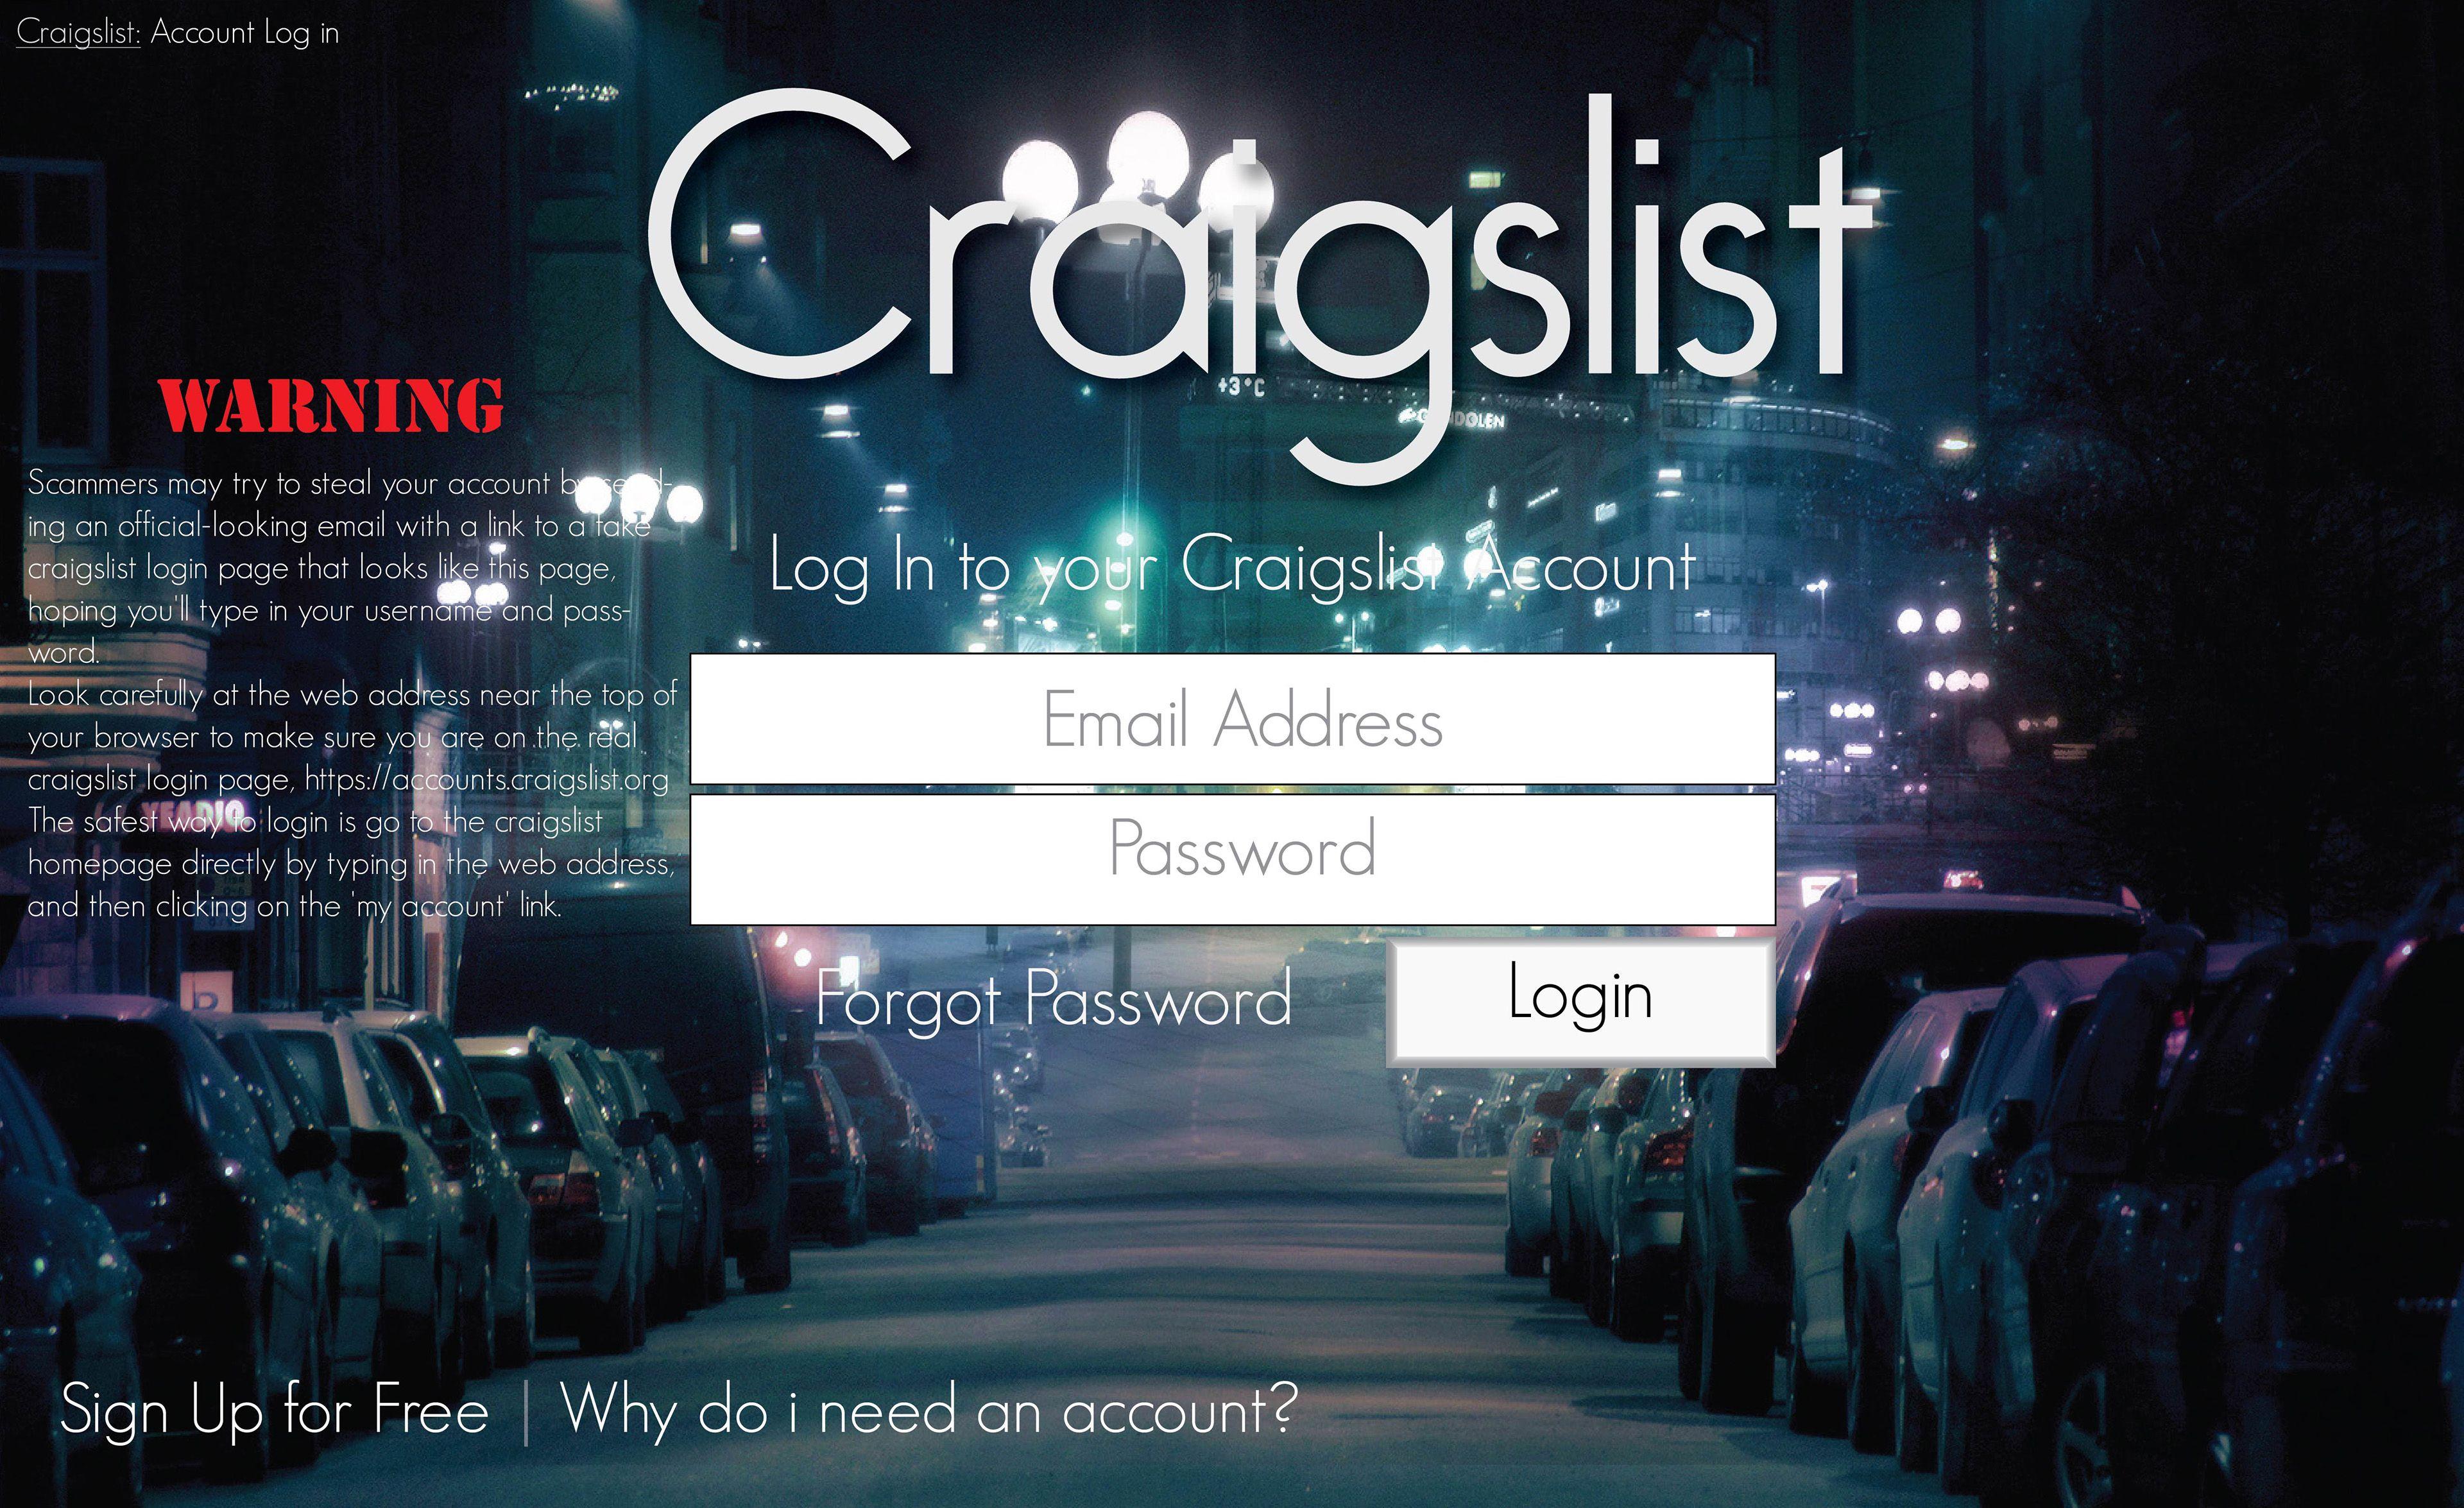 Official Craigslist Logo - The New Craigslist on Behance